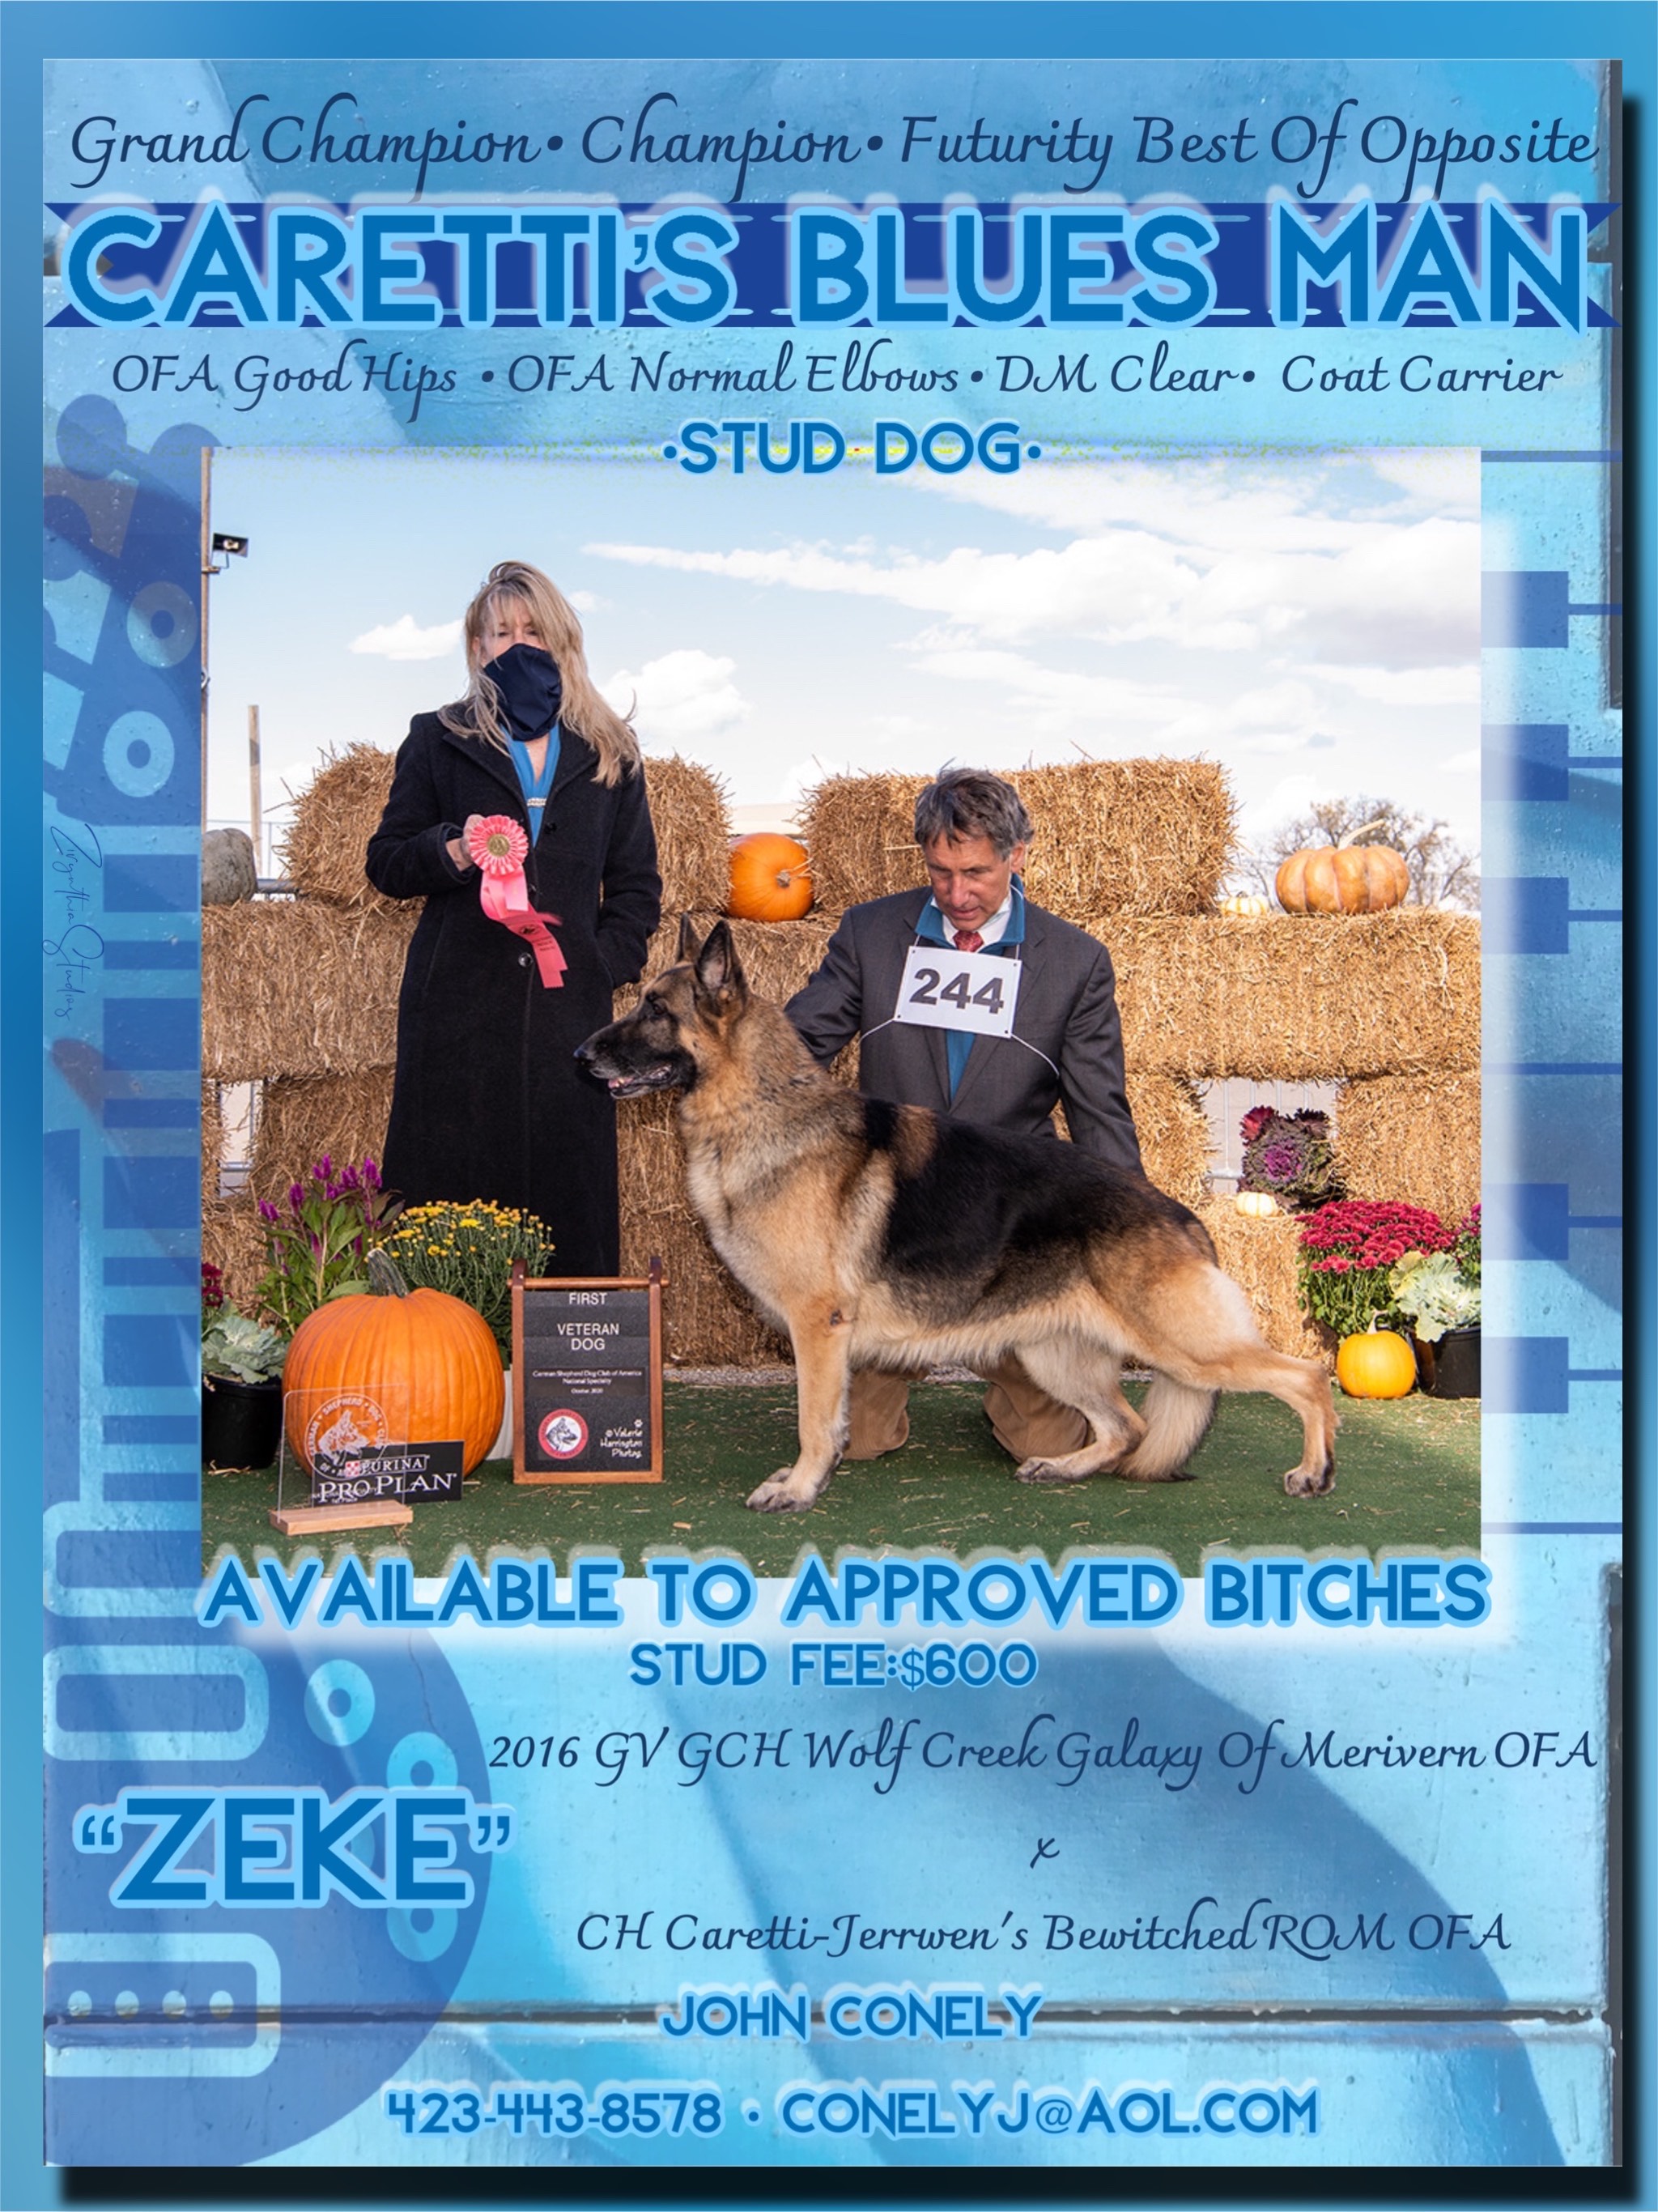 information on a german shepard dog called Zeke